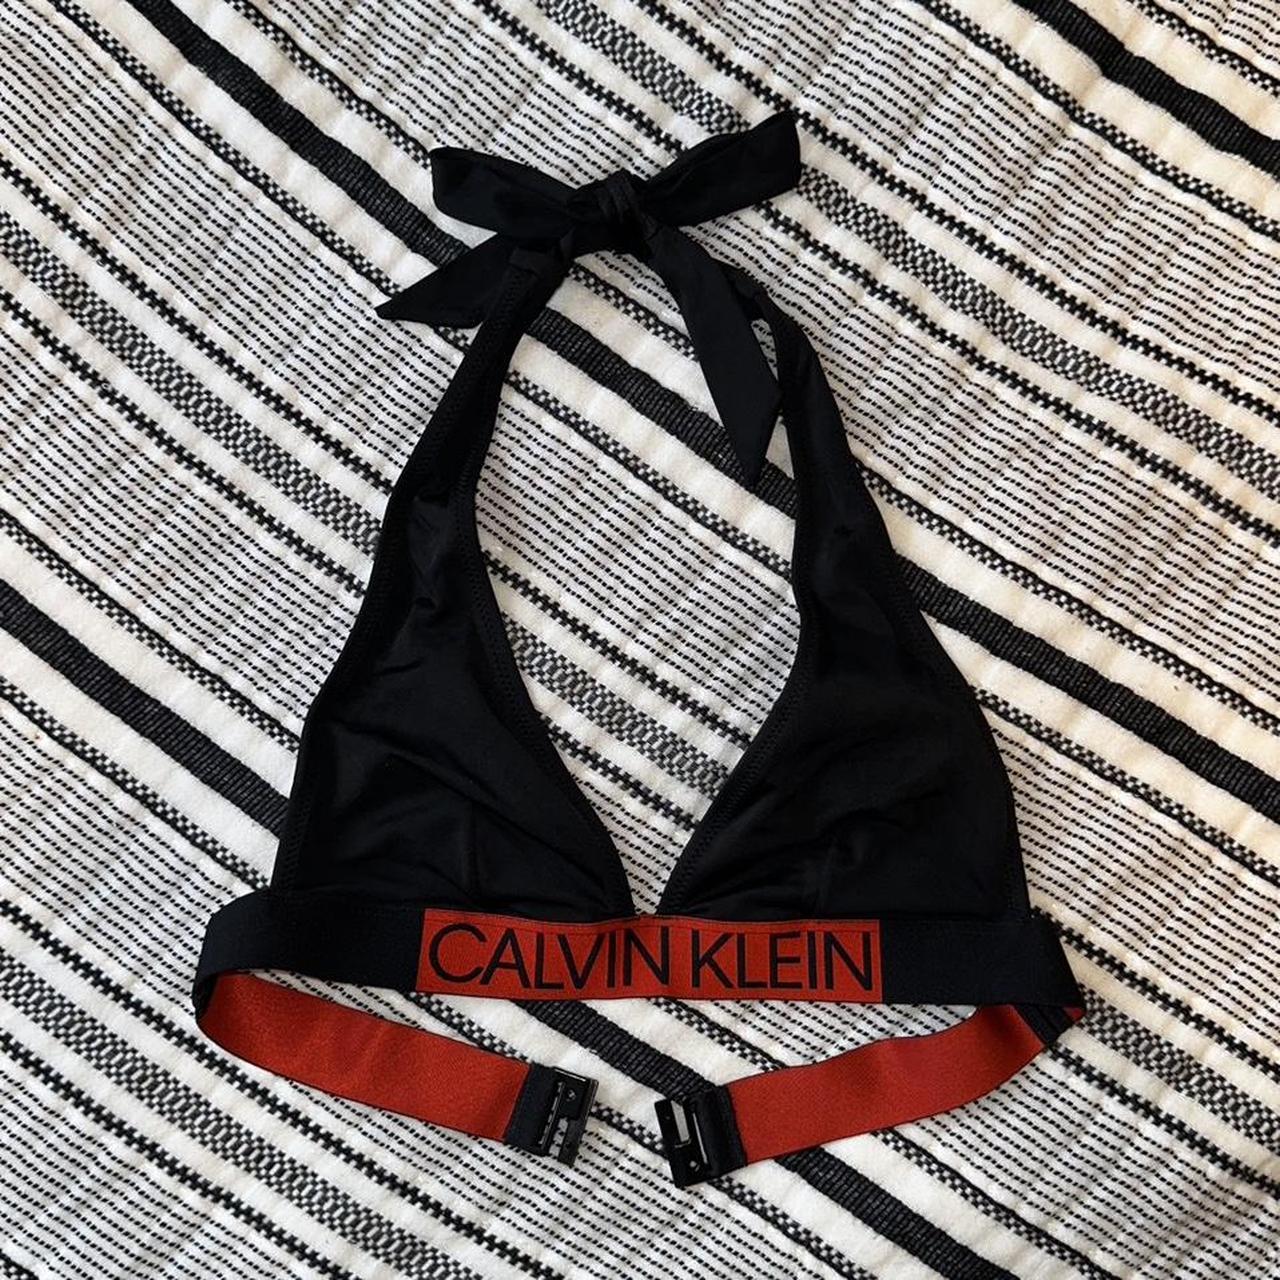 Calvin Klein modern cotton bikini slip. Size XS, new - Depop